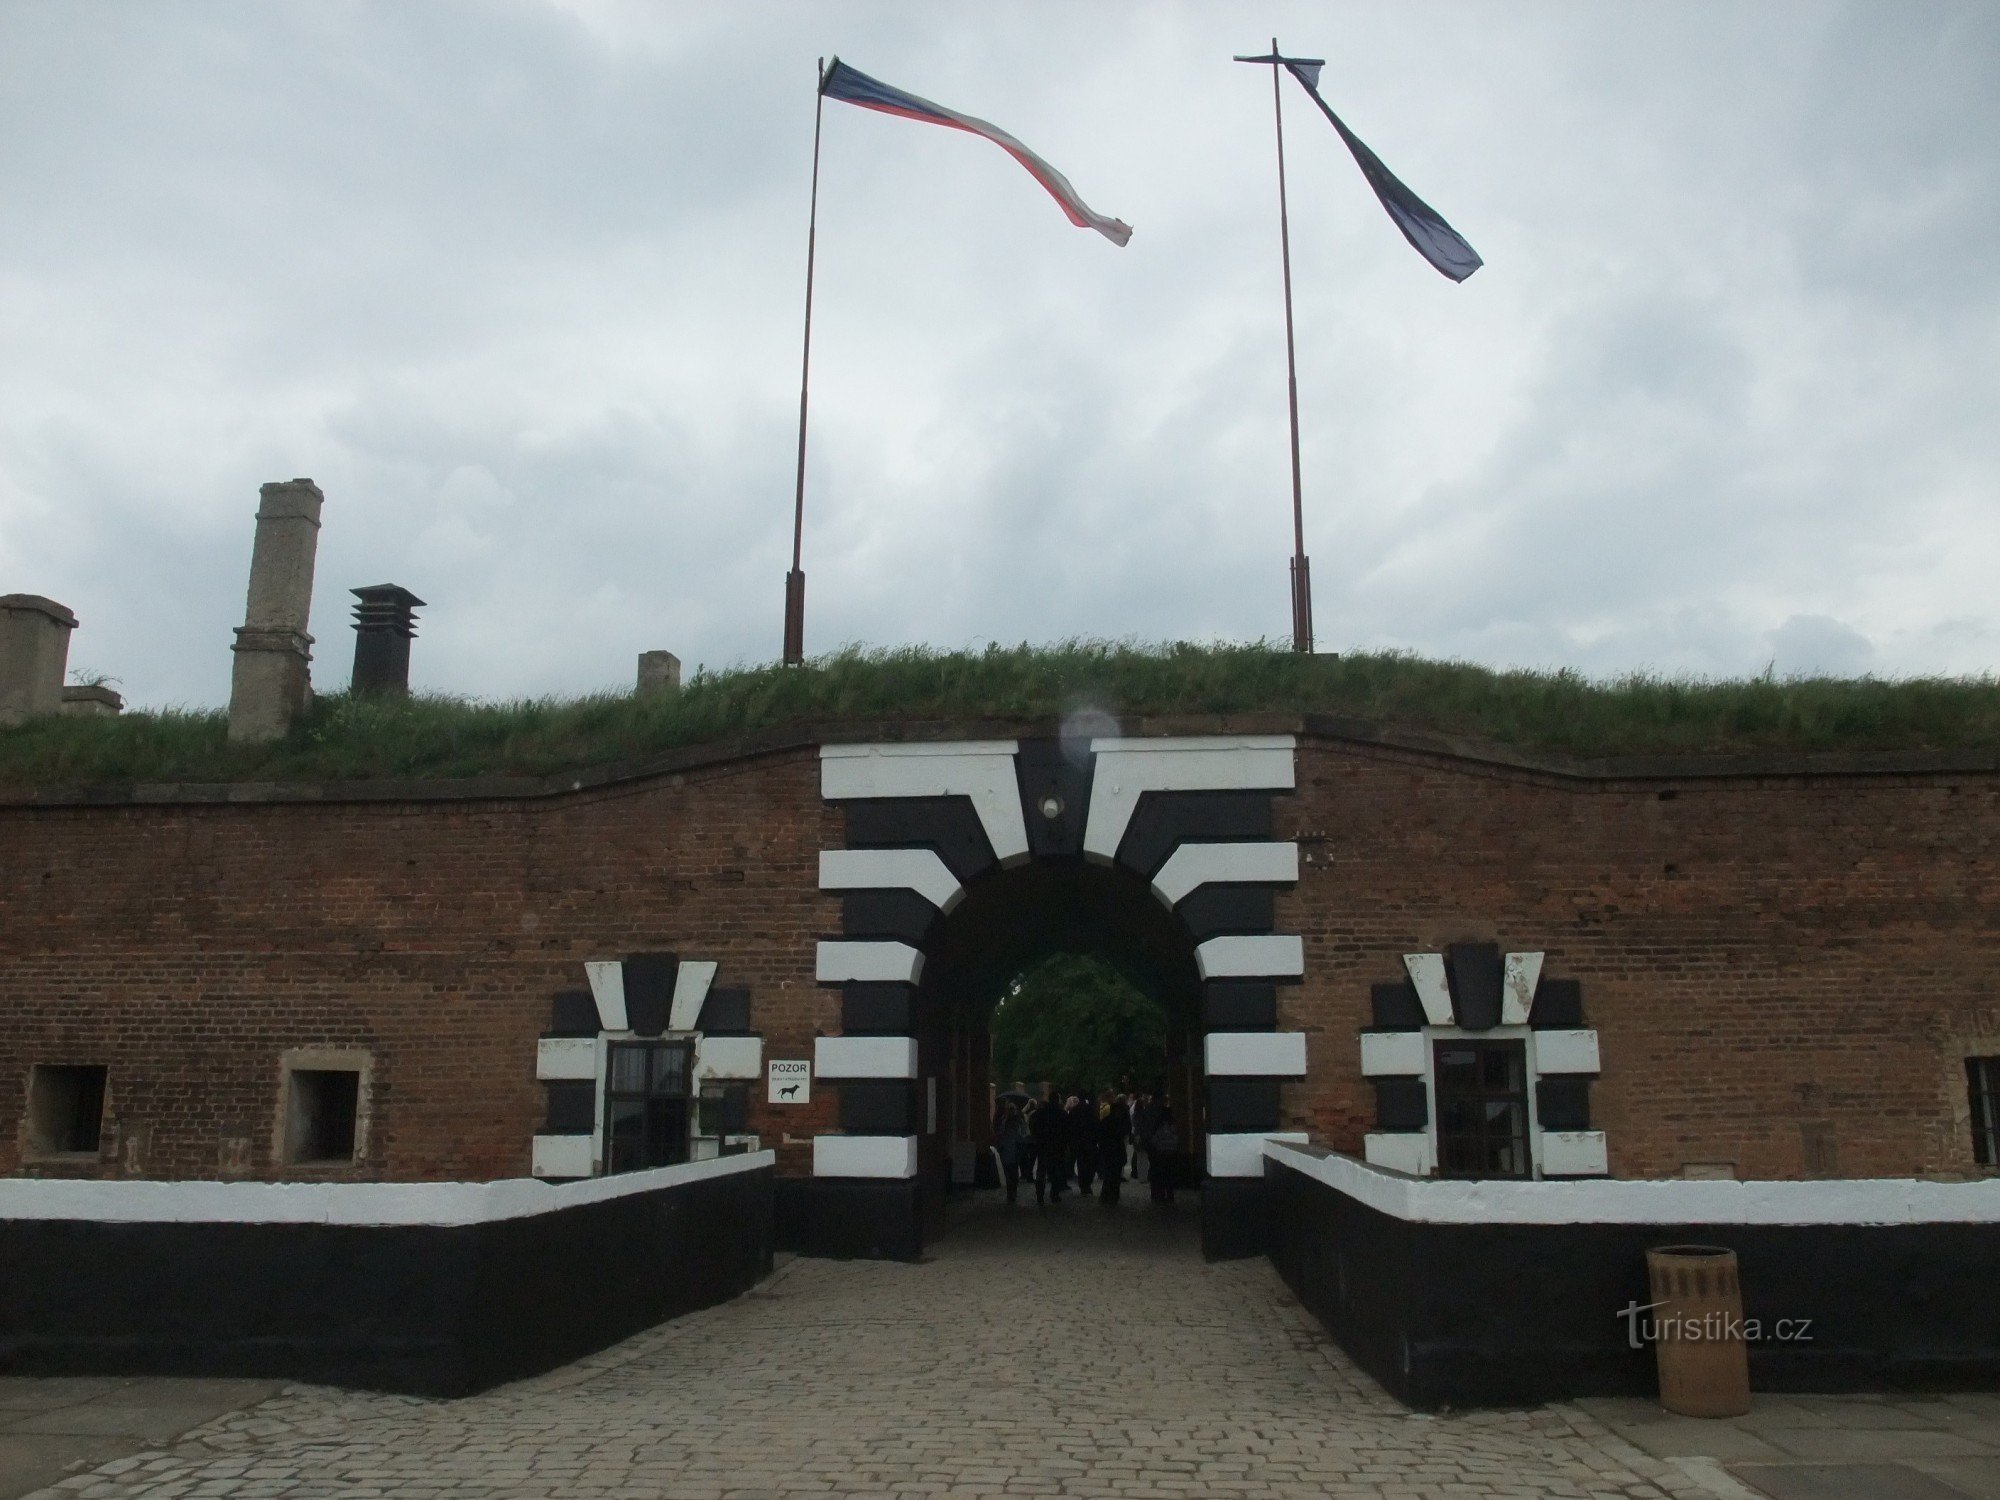 Lille fæstning i Terezín